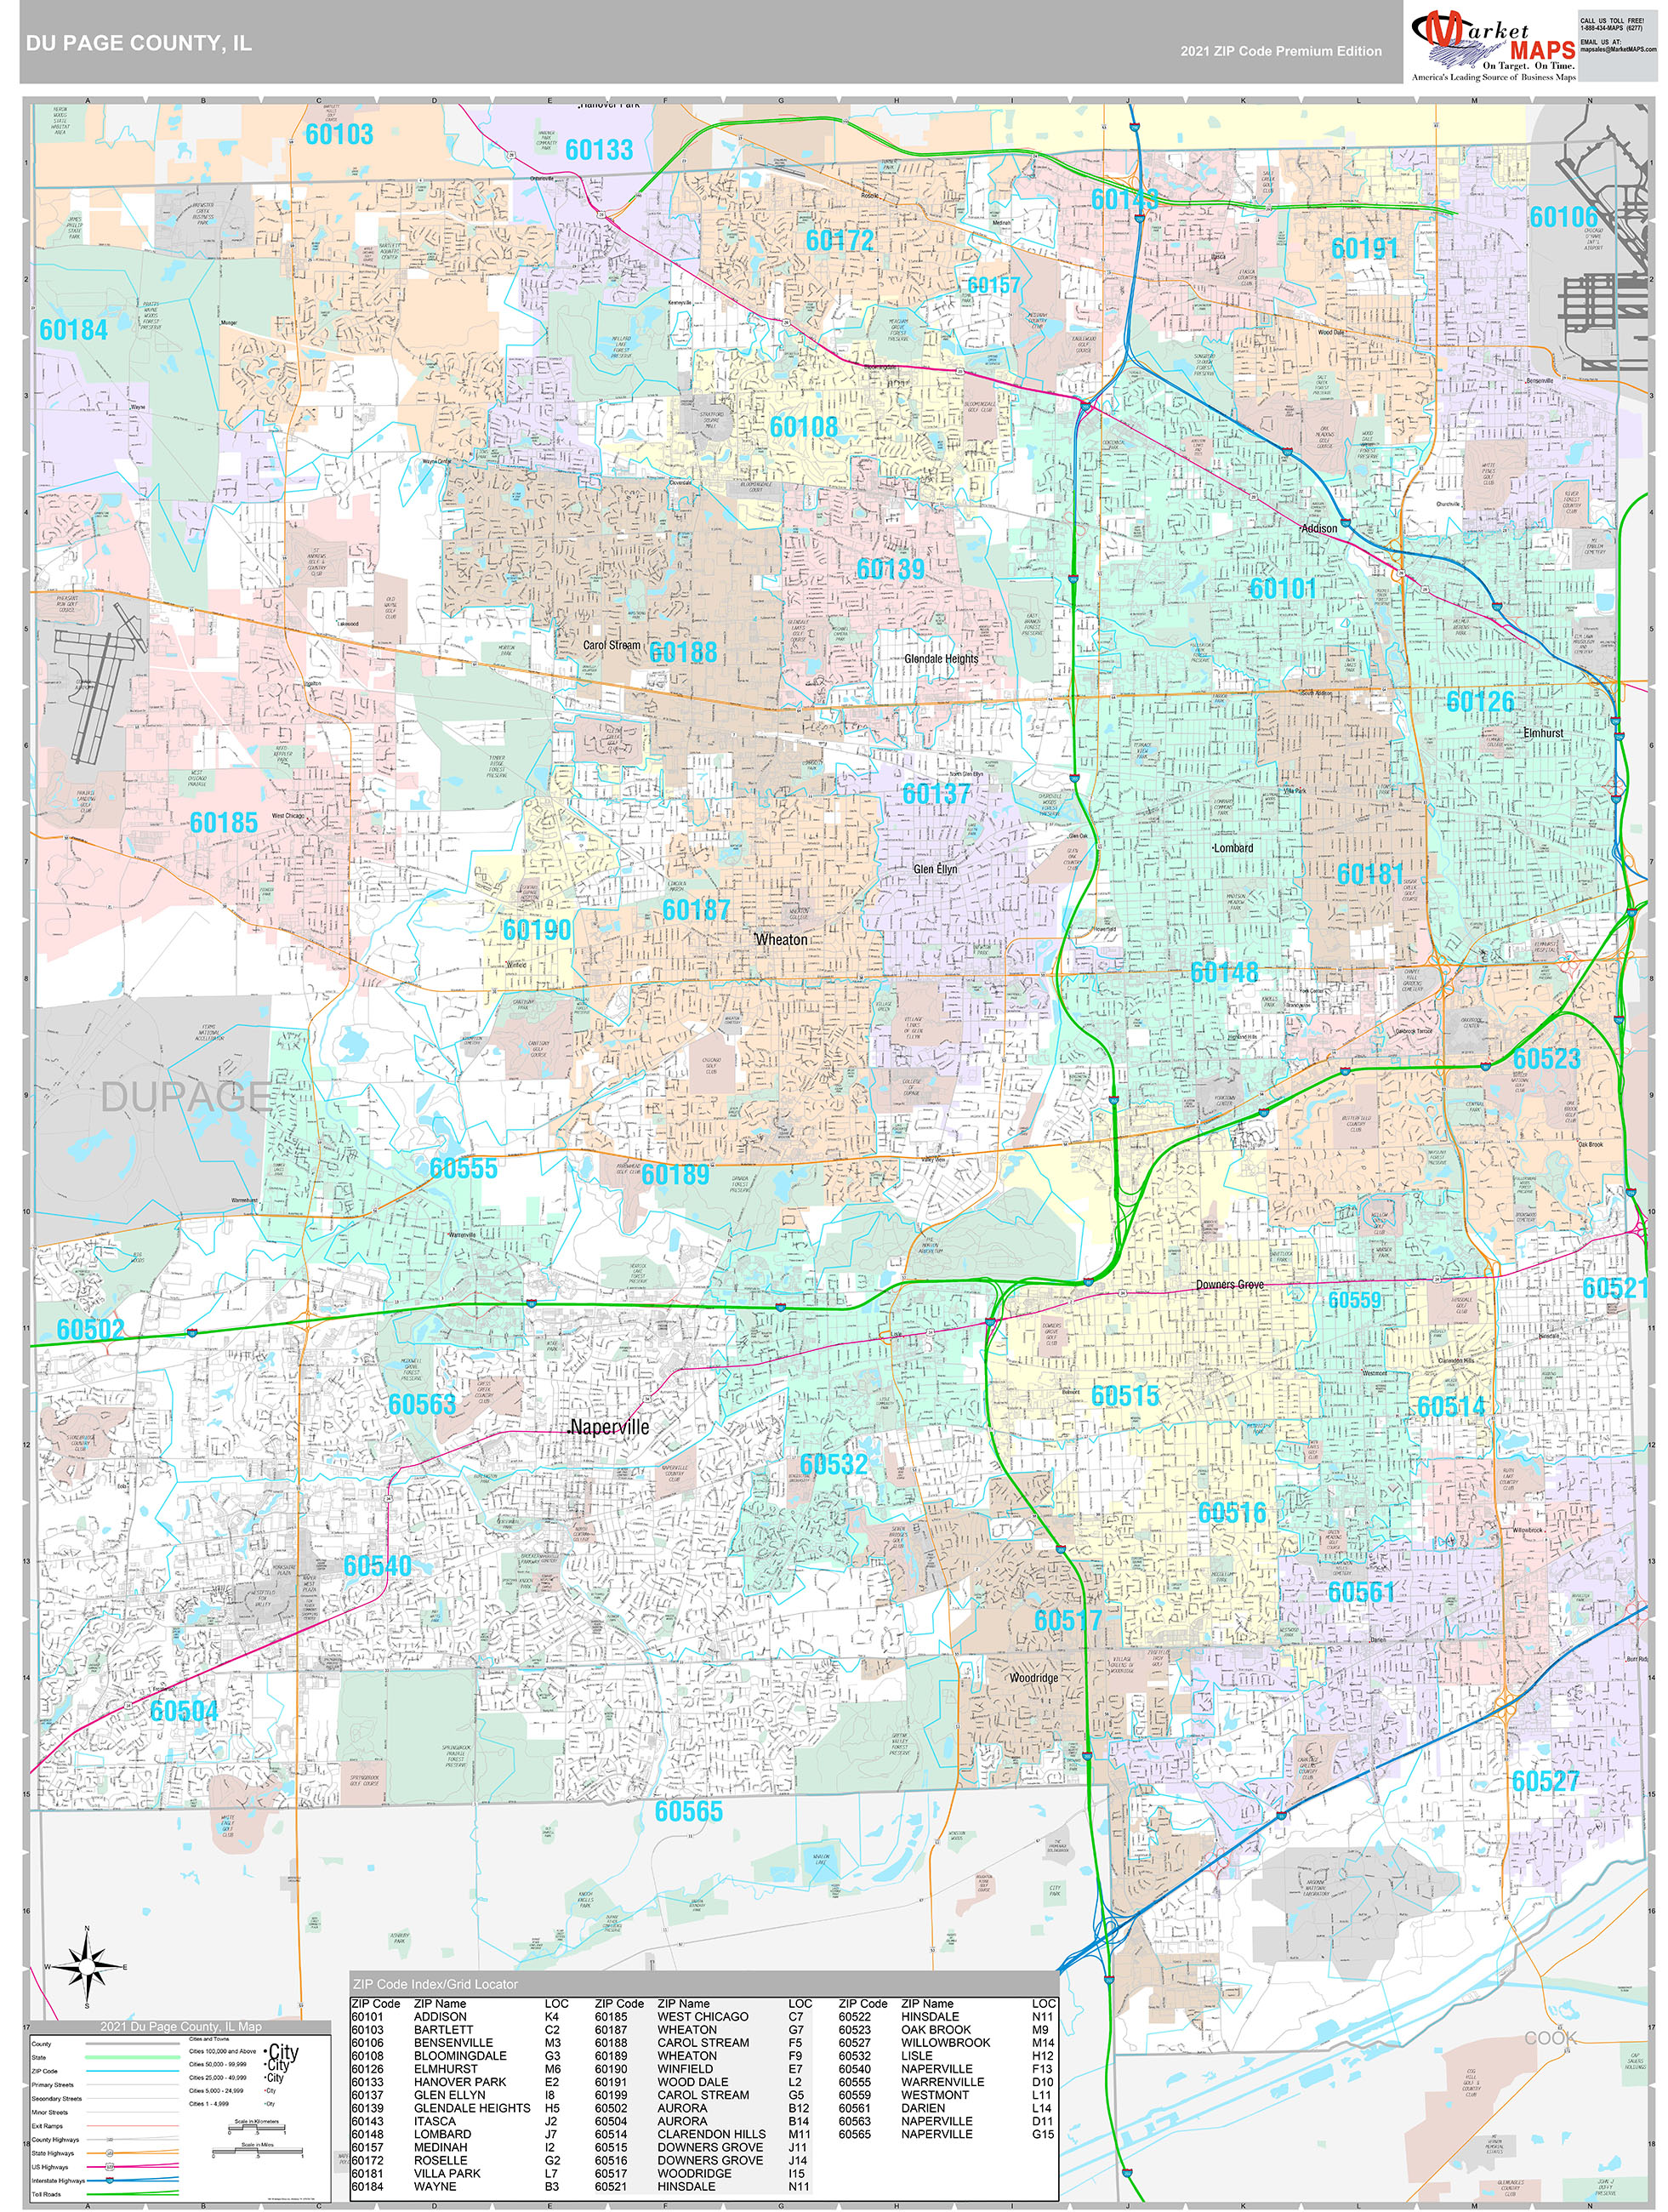 DuPage County IL Wall Map Premium Style by MarketMAPS MapSales